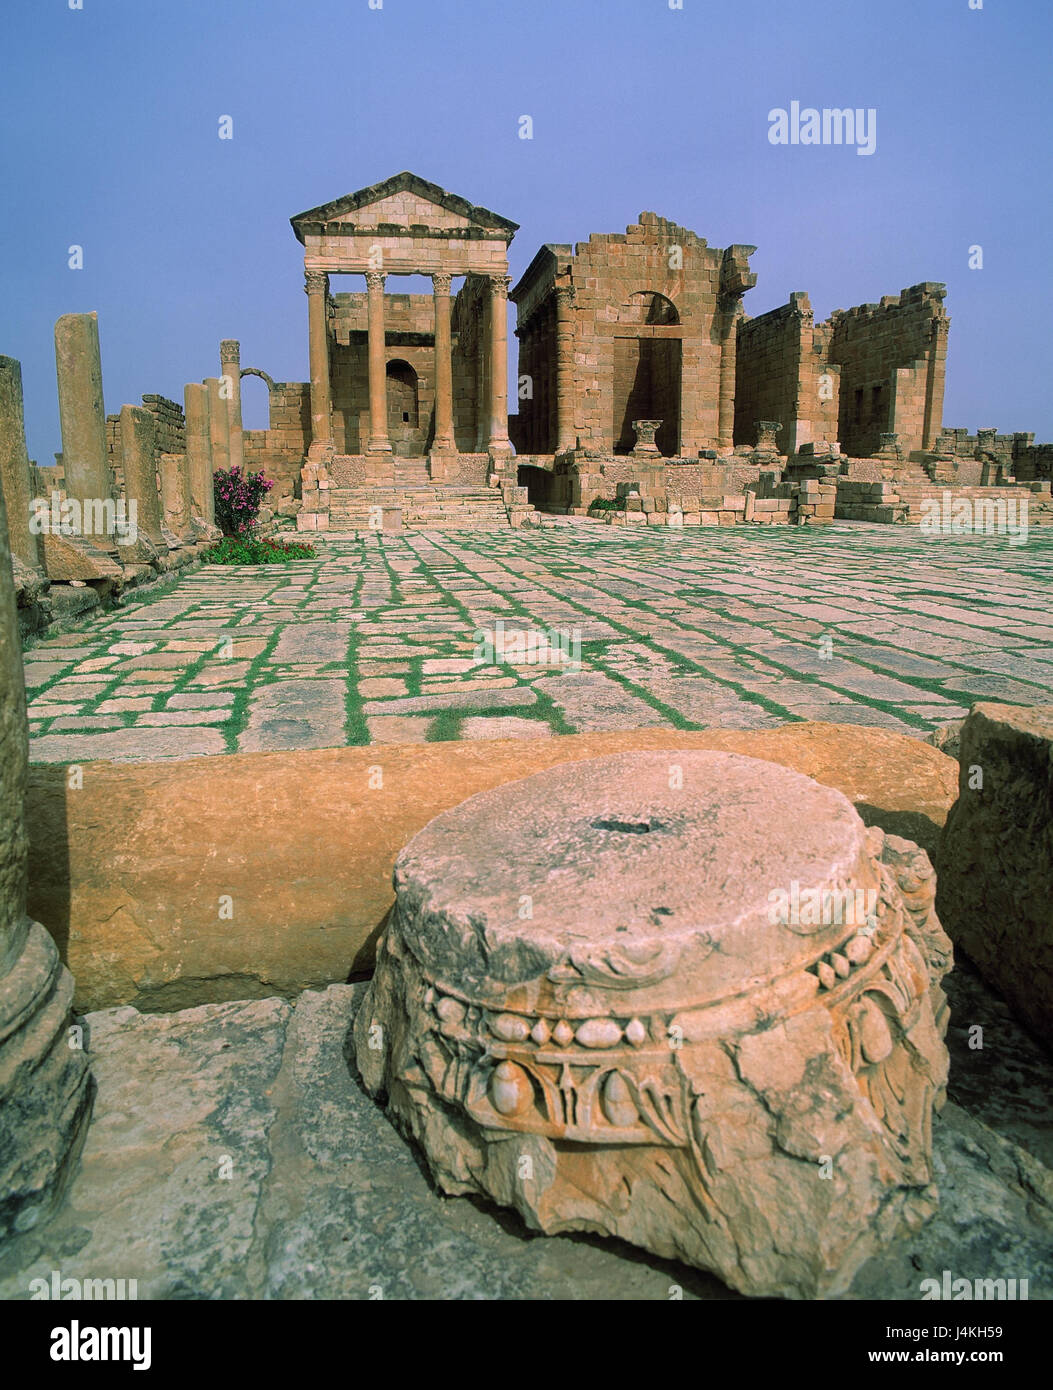 Tunisia, Sbeitla, Juptier temple, Juno temple outside, ruins, temple ruins, Roman, excavations, art, culture Stock Photo